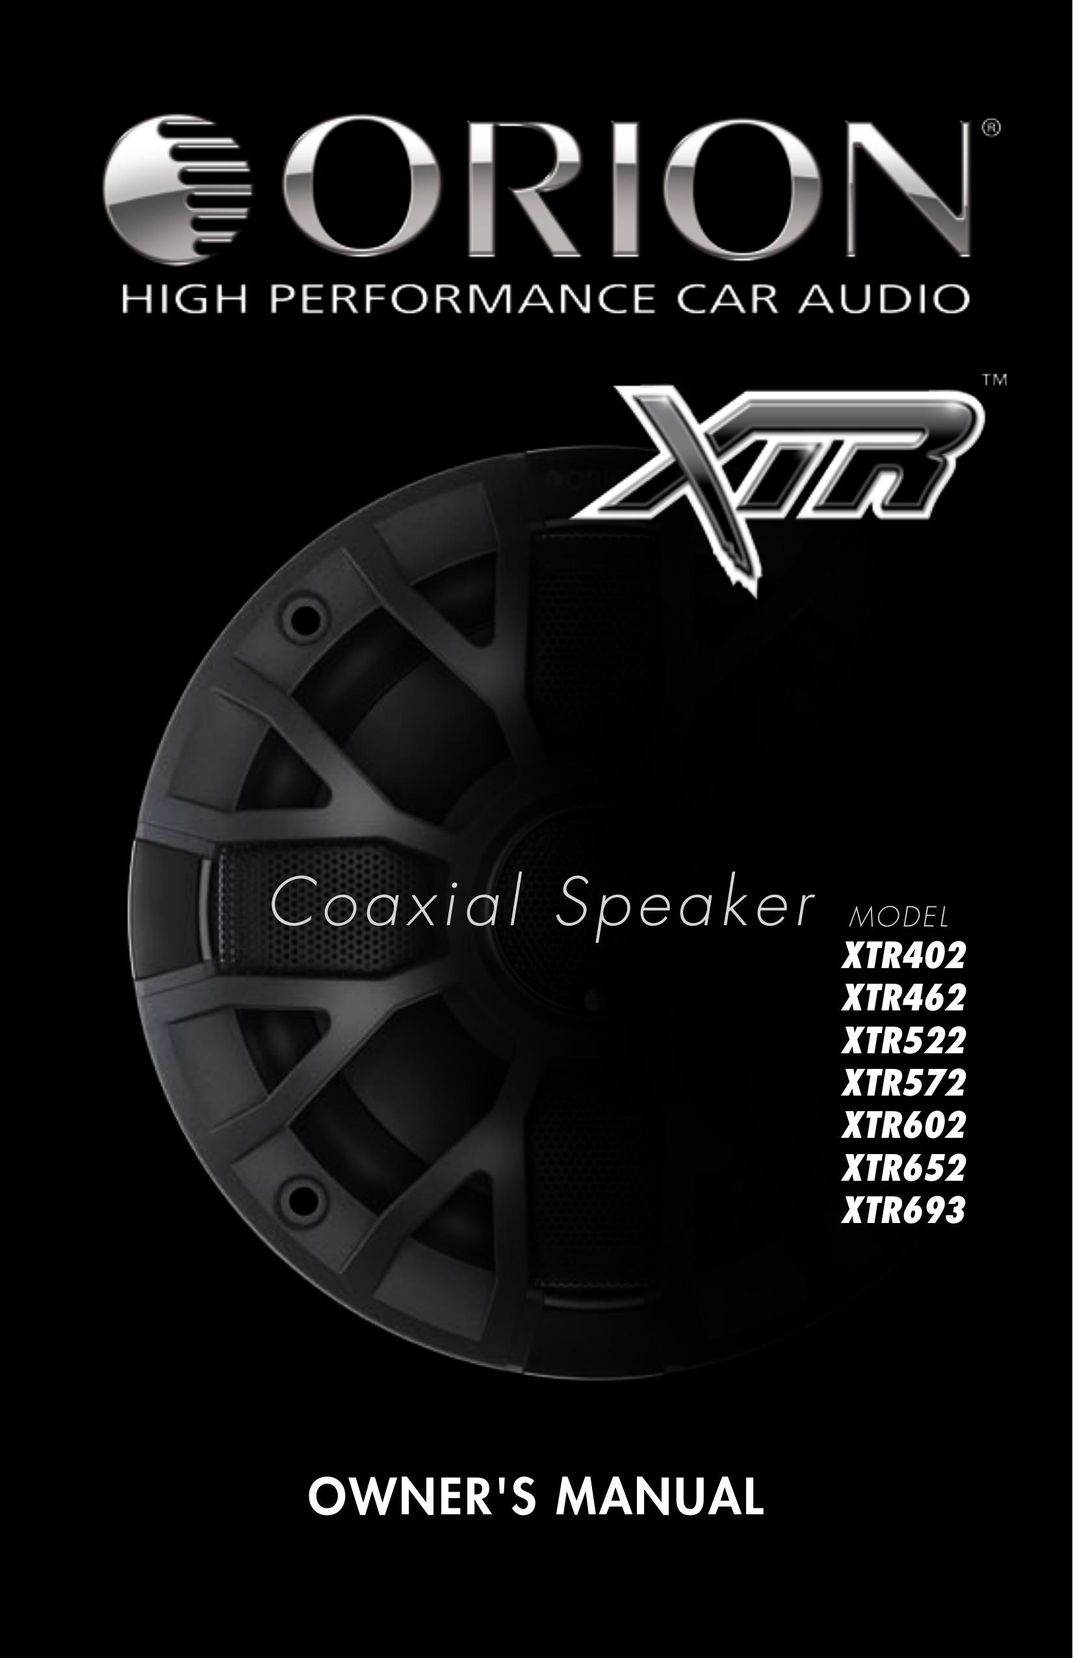 Orion Car Audio XTR402 Car Speaker User Manual